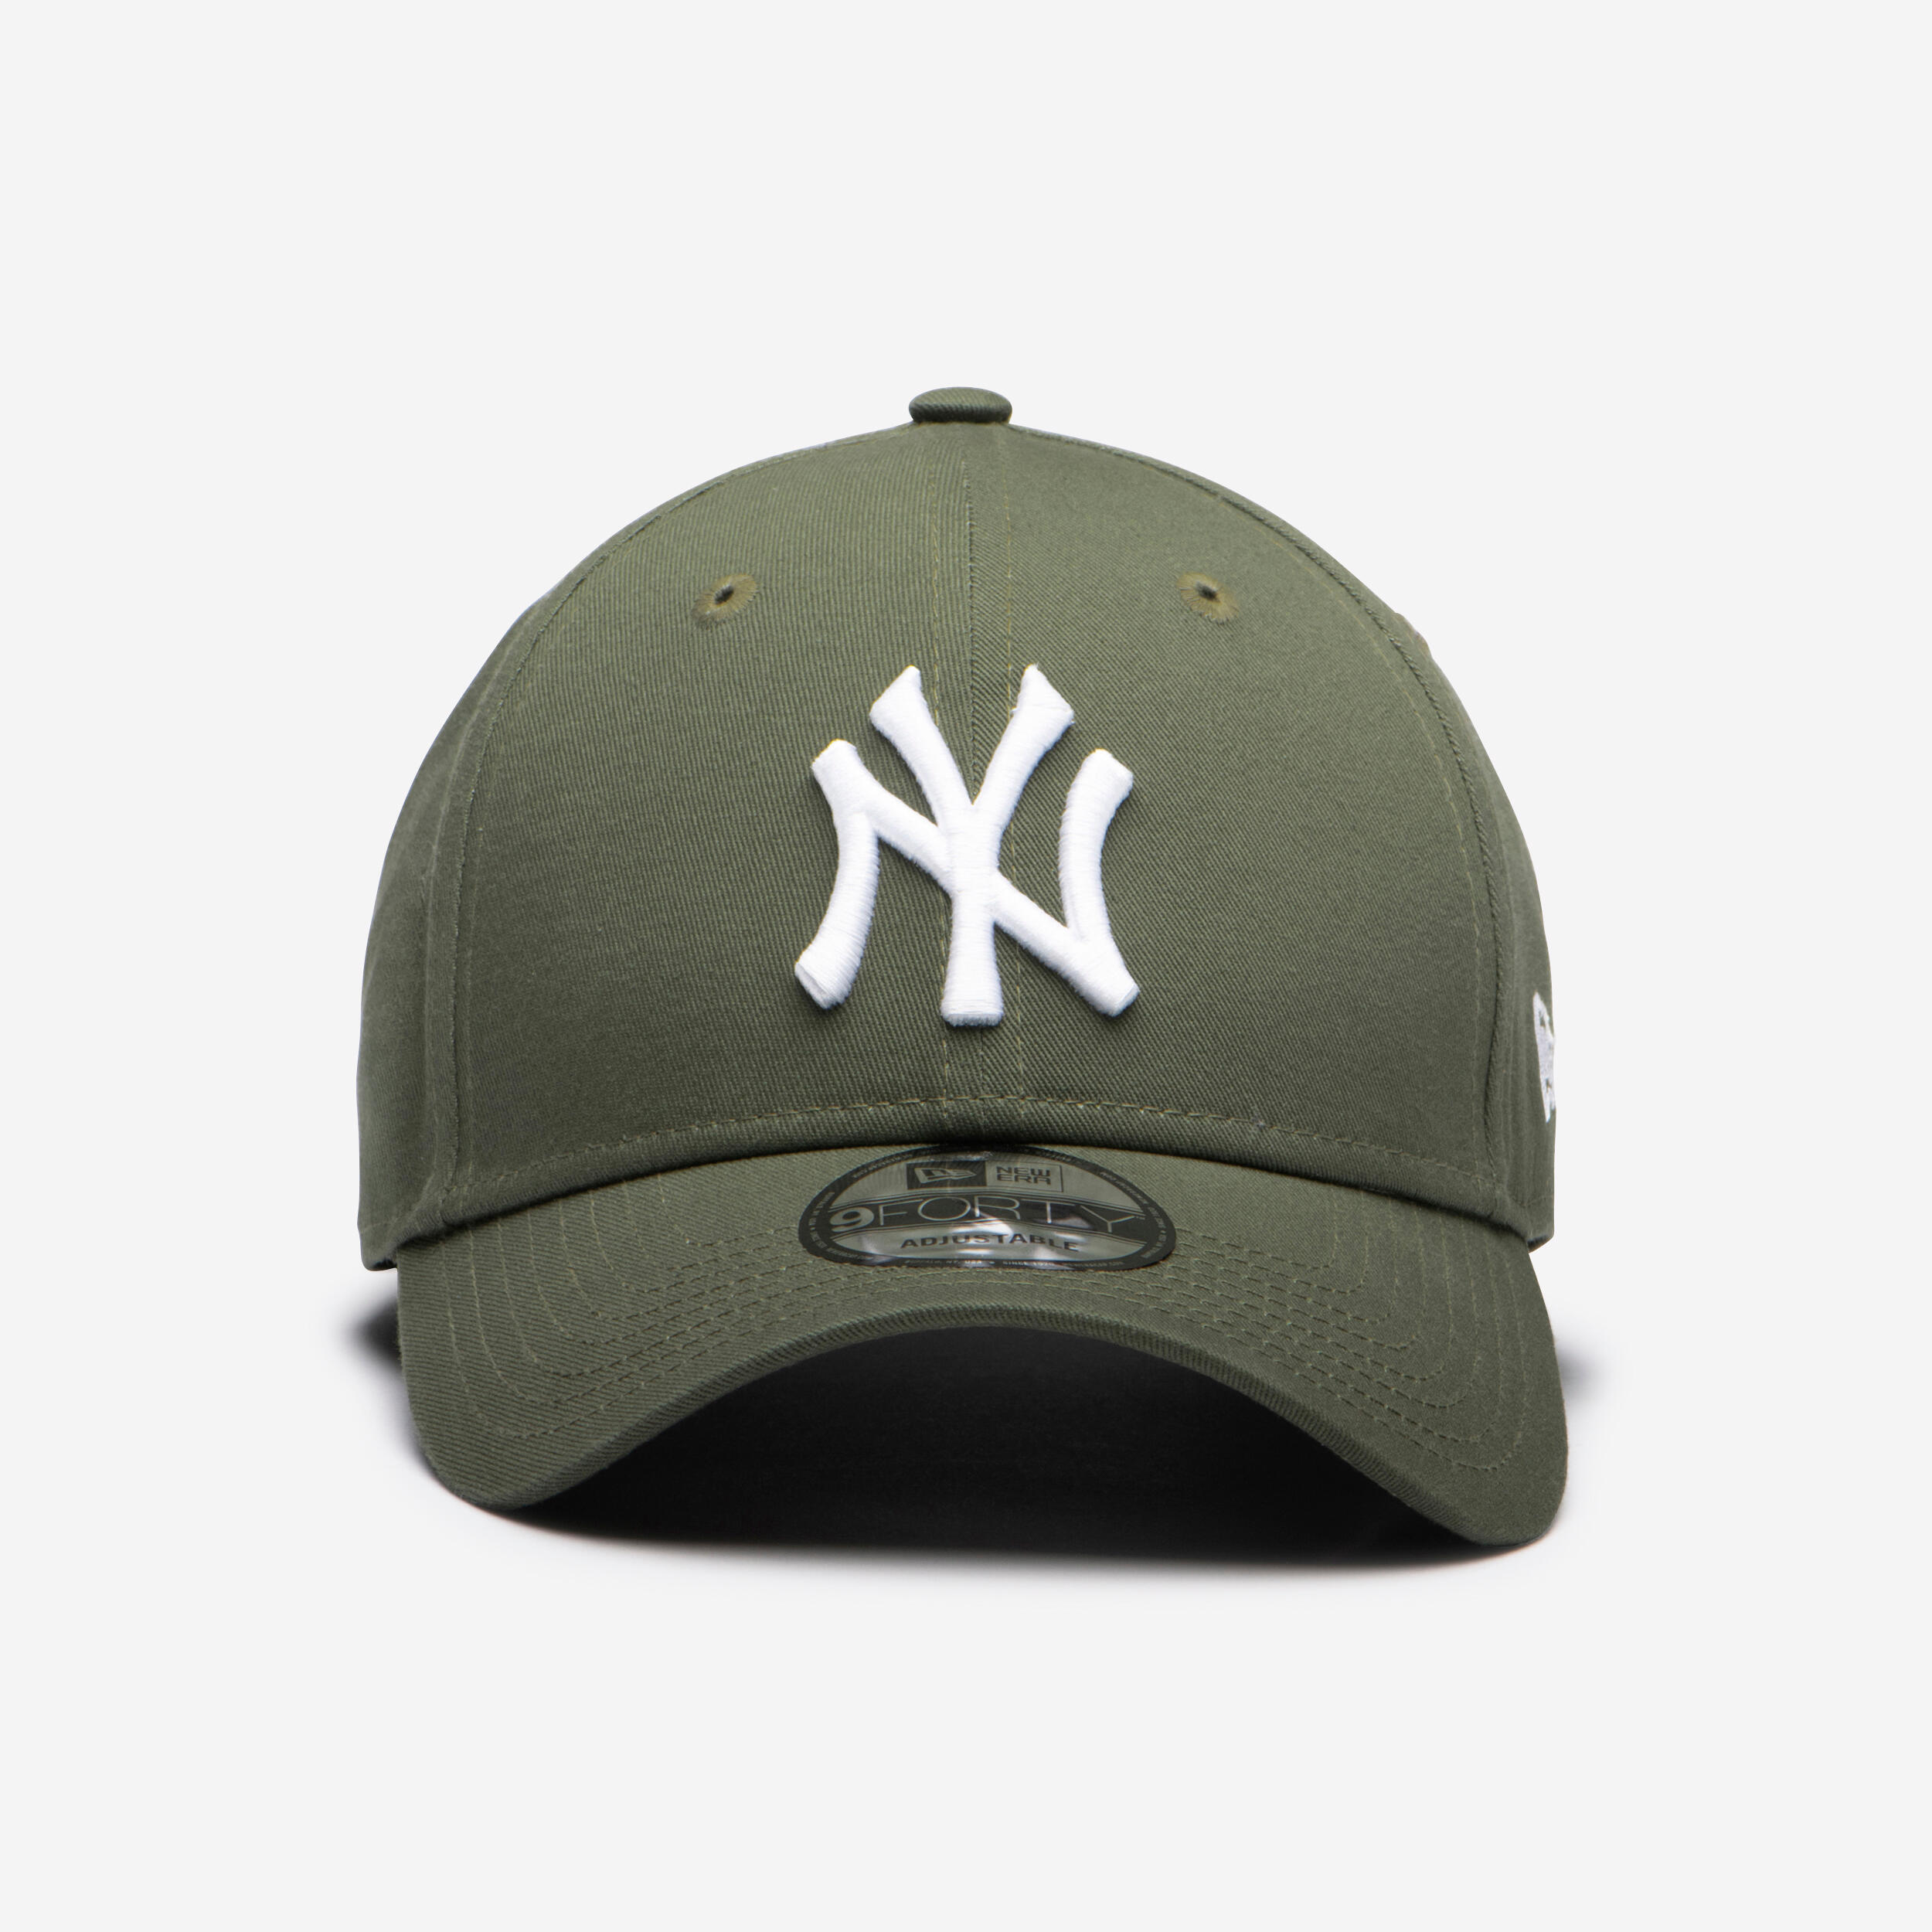 Amazoncom  New Era 59Fifty Hat MLB Basic New York Yankees BlackBlack  Fitted Baseball Cap 7 58  Sports  Outdoors